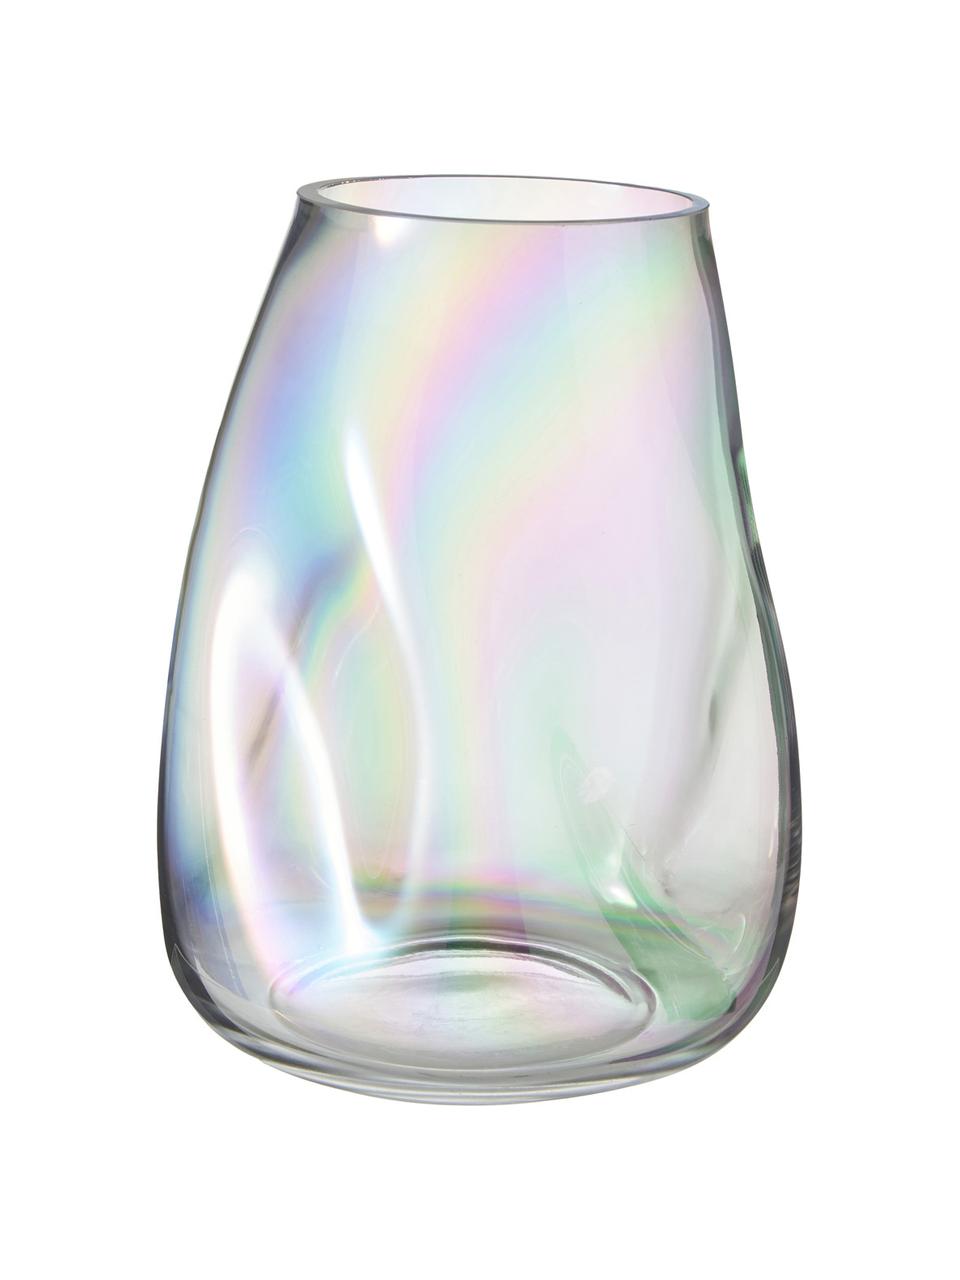 Vaso in vetro soffiato iridescente Rainbow, Vetro soffiato, Trasparente, iridescente, Ø 18 x Alt. 26 cm